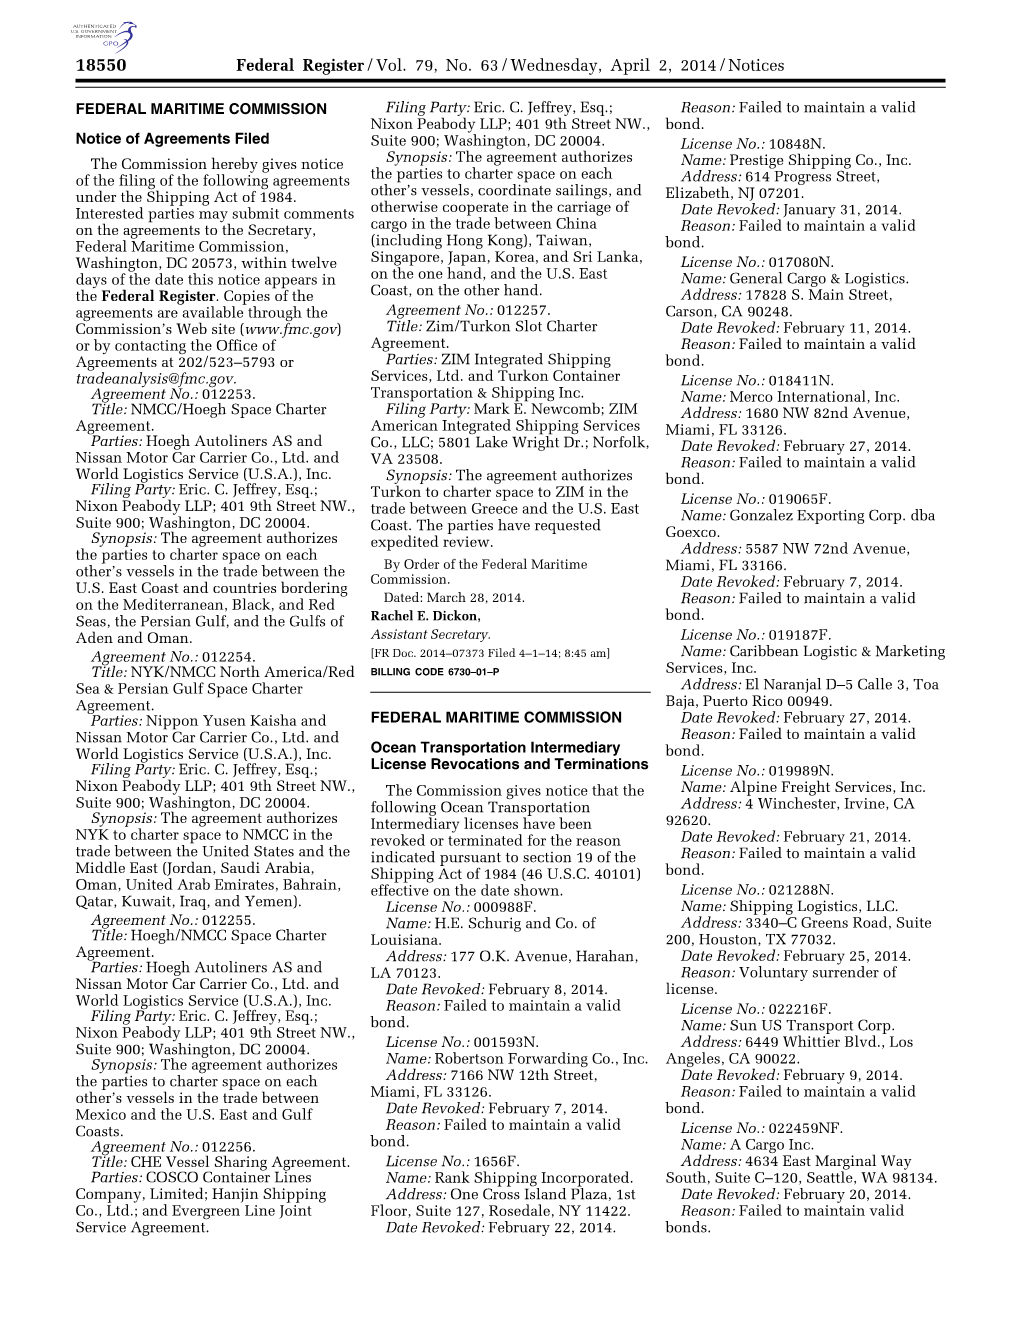 Federal Register/Vol. 79, No. 63/Wednesday, April 2, 2014/Notices